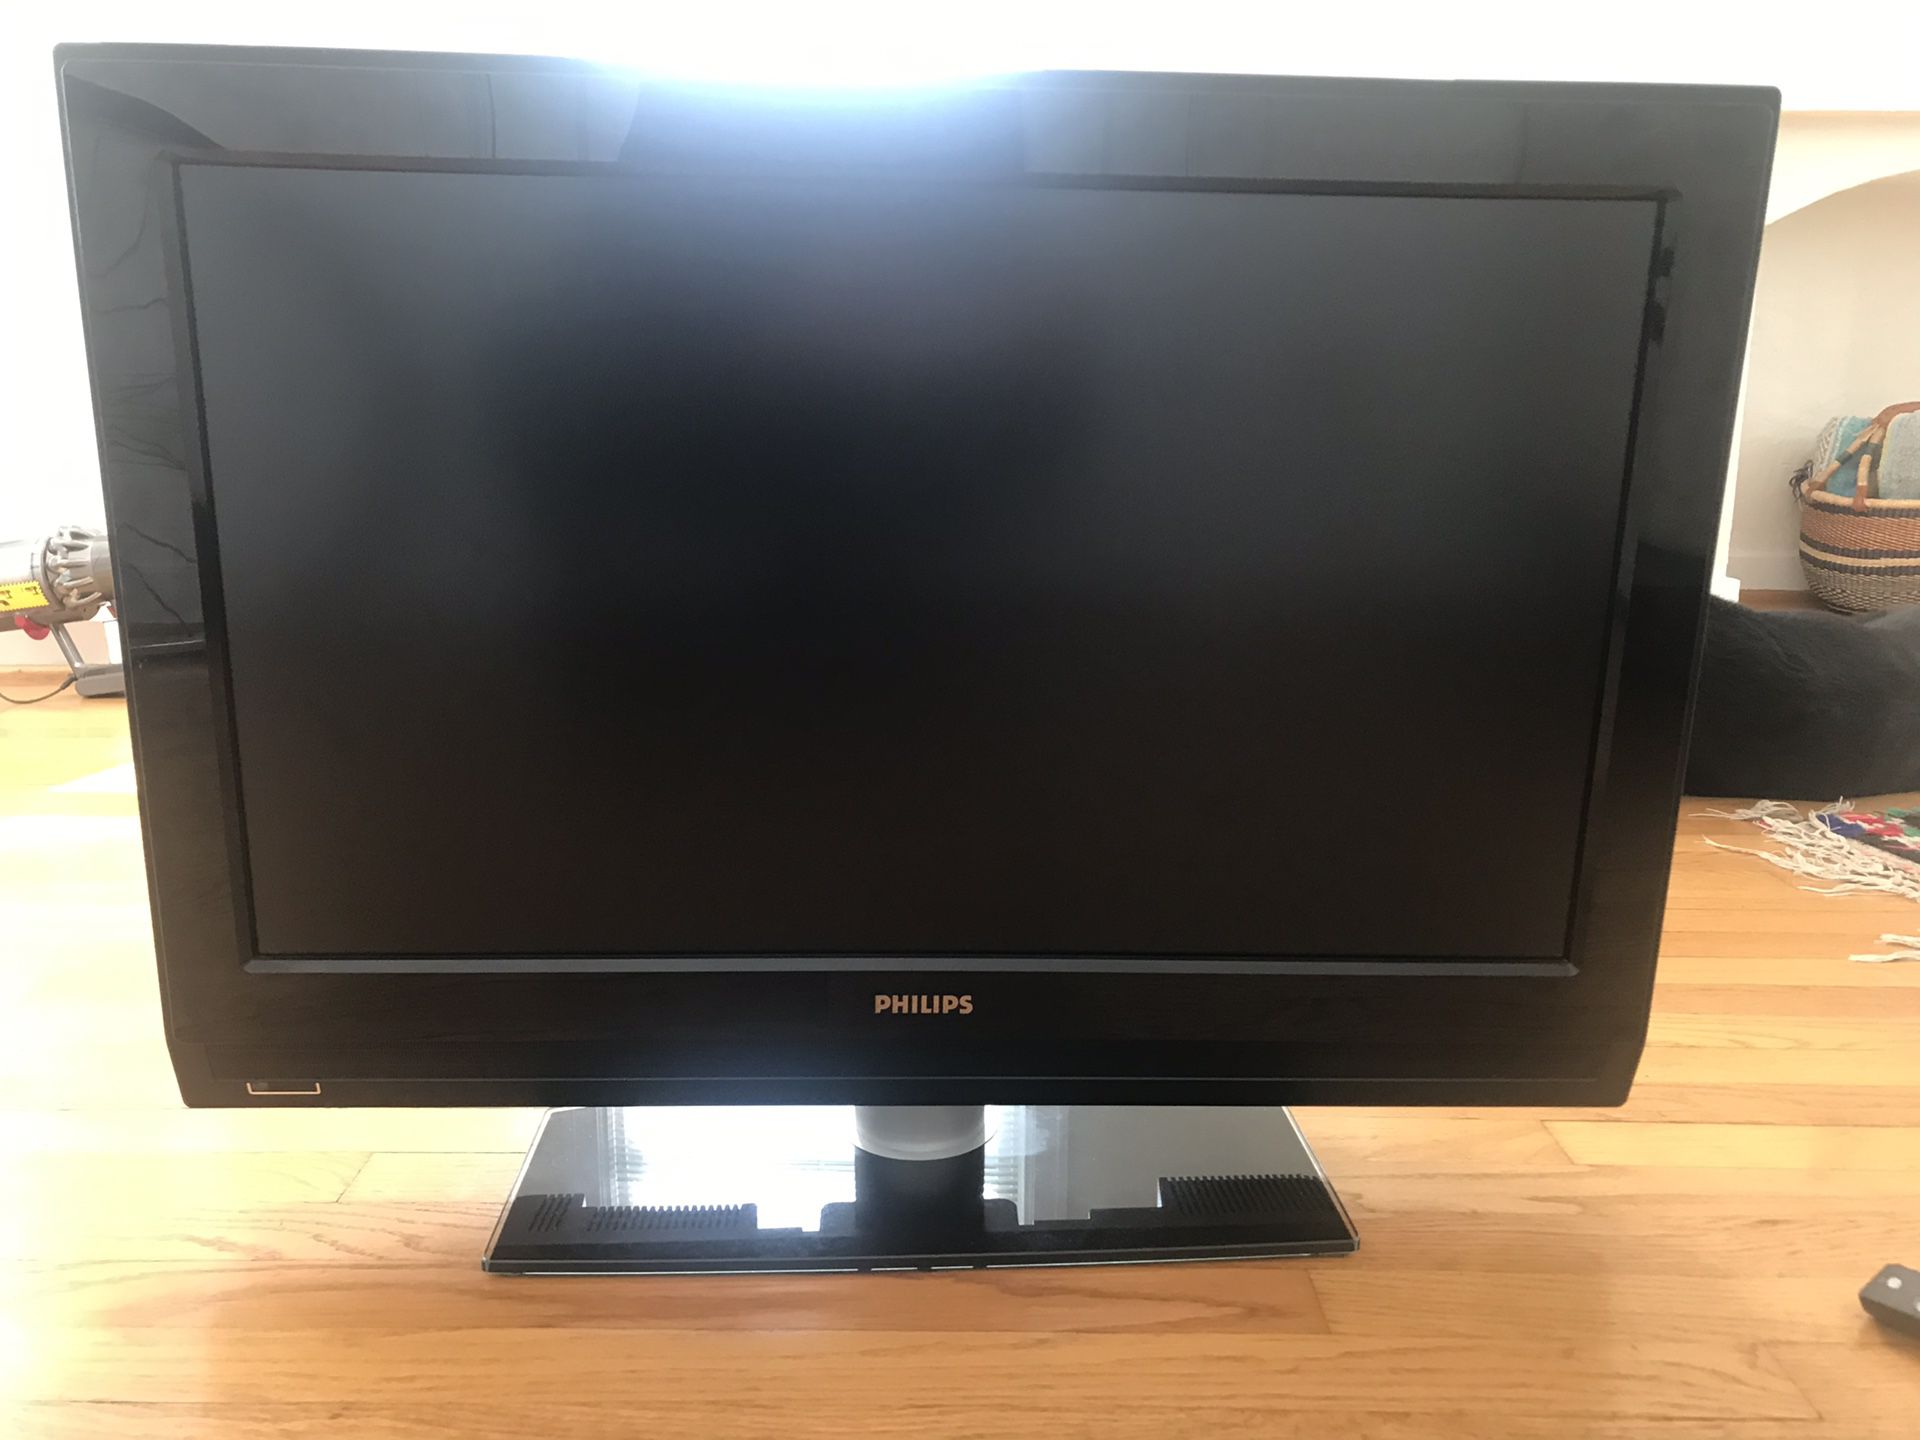 Phillips 32” LCD Flat screen TV